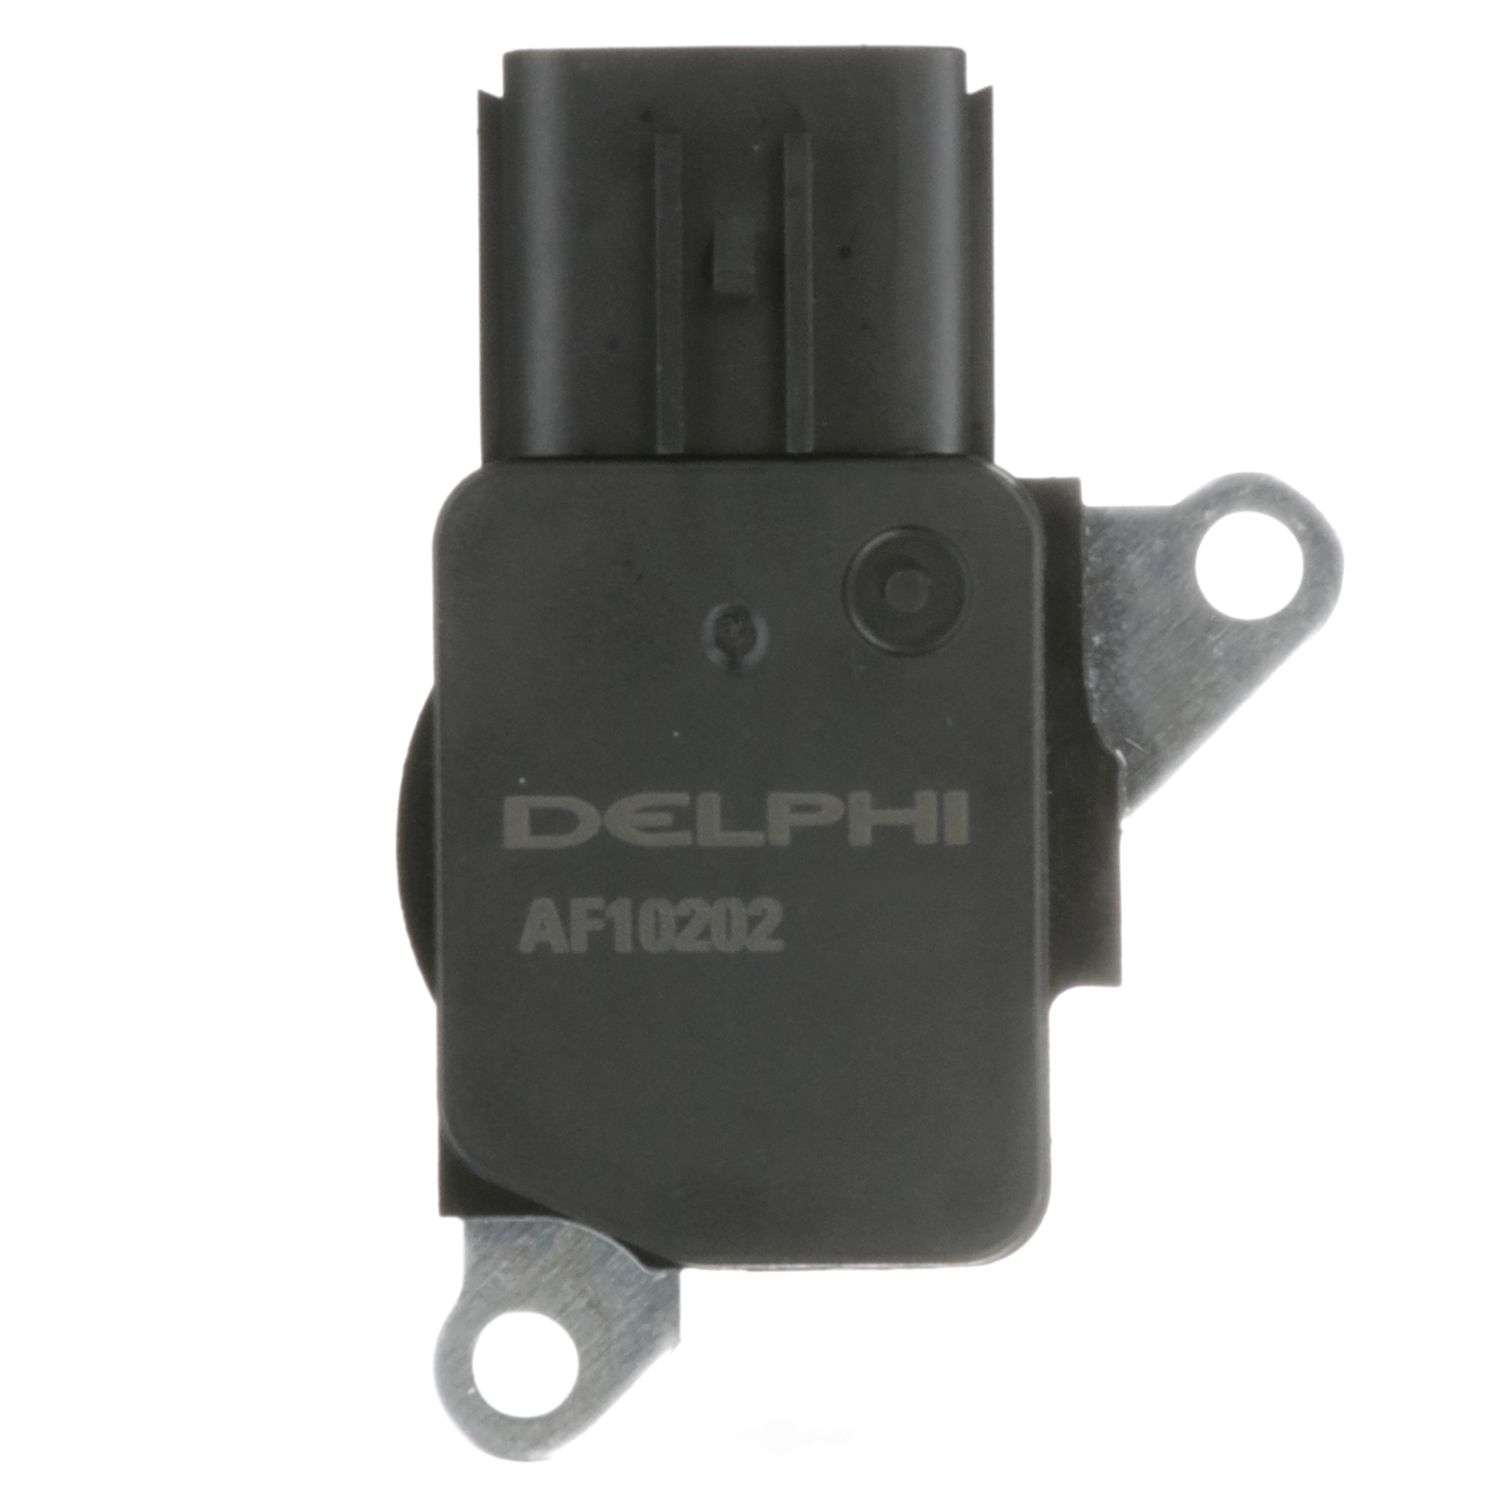 DELPHI - Mass Air Flow Sensor - DPH AF10202